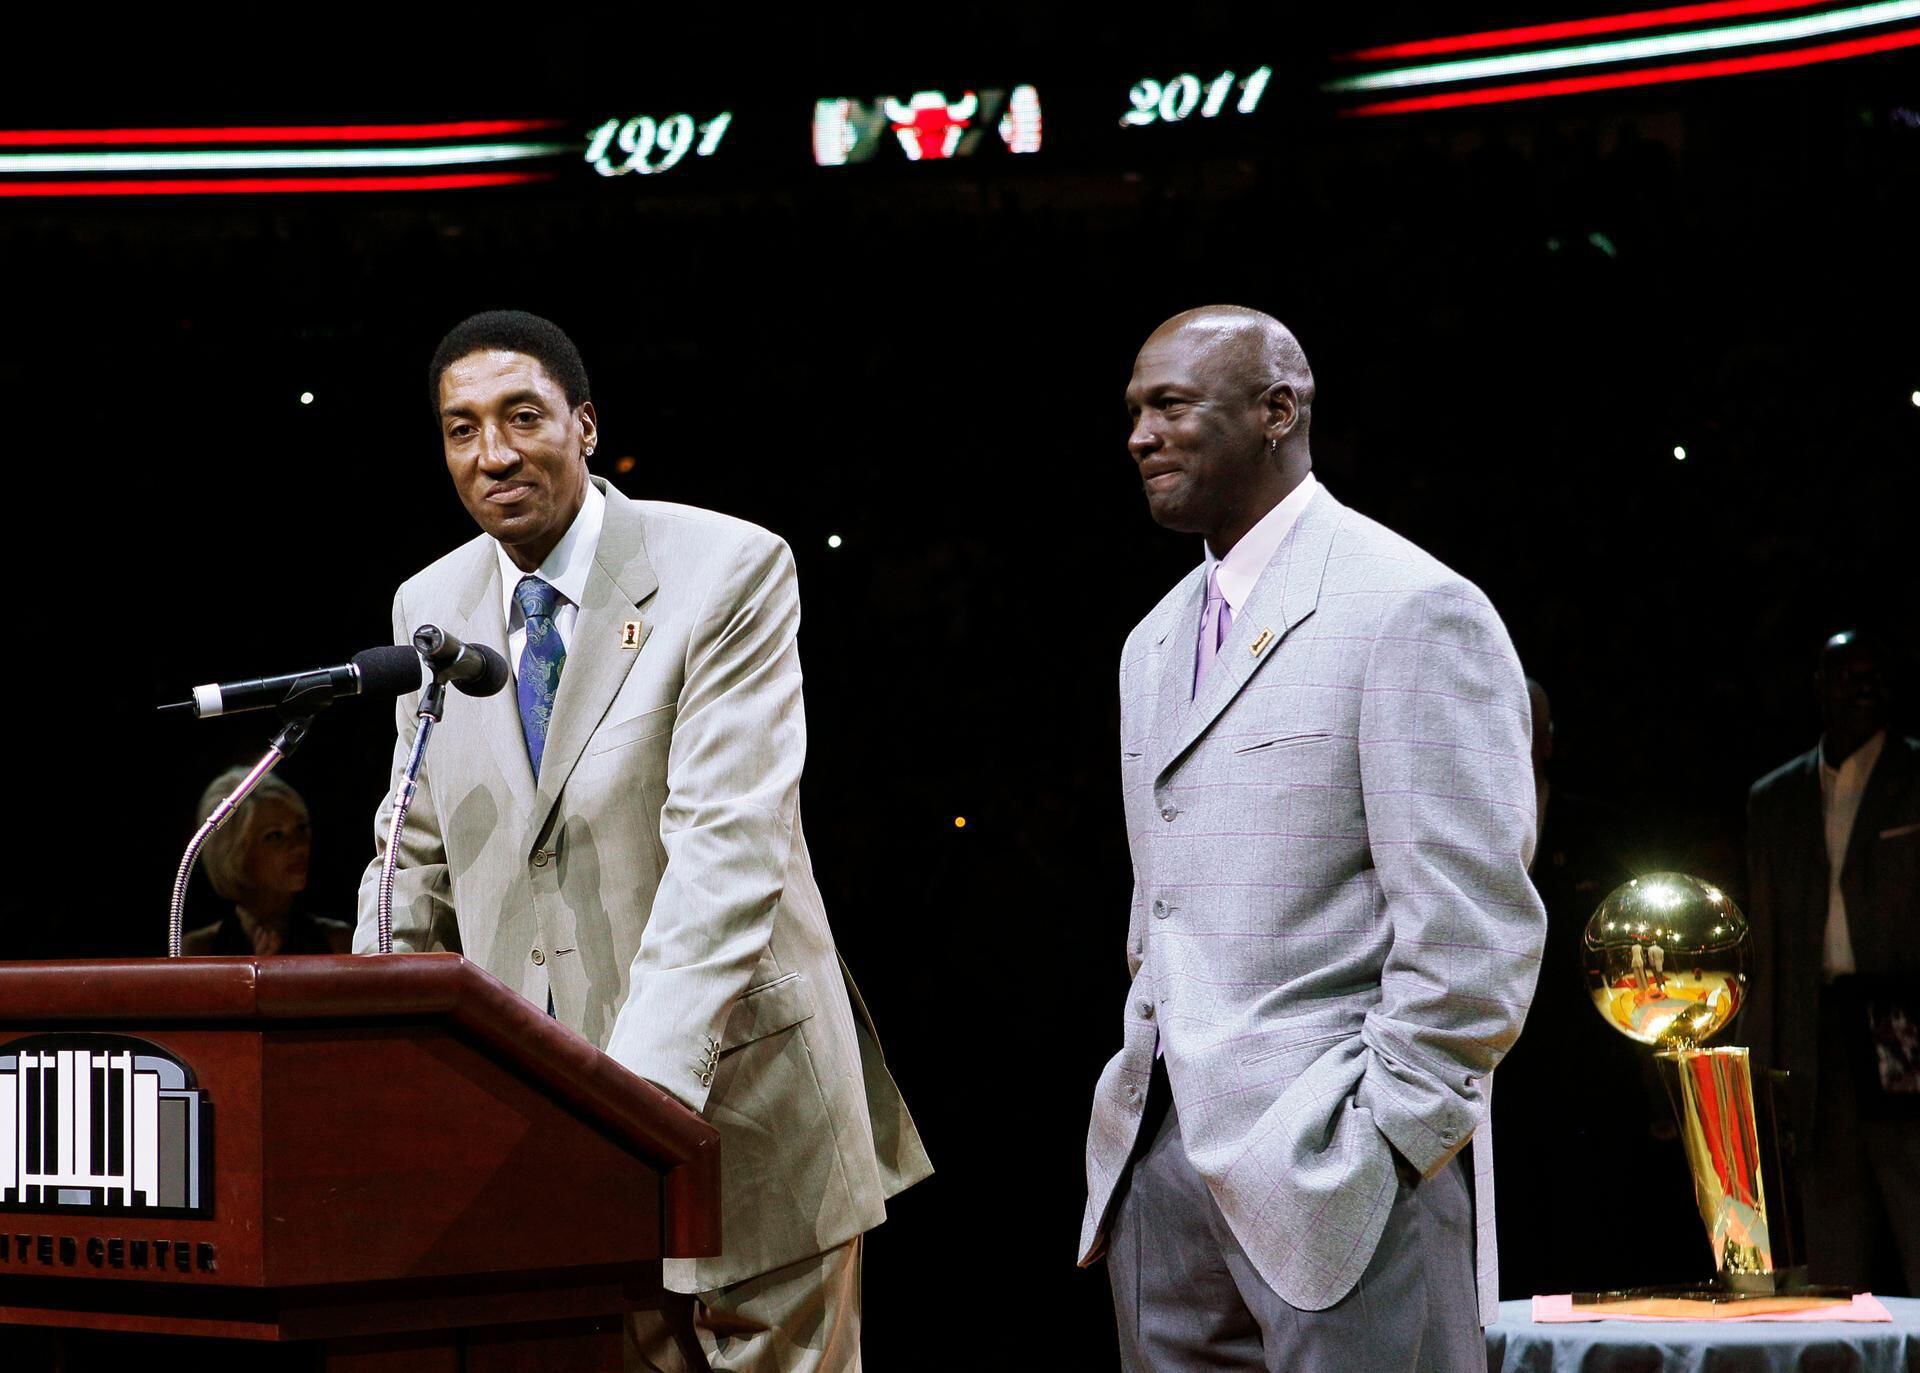 Michael Jordan's Game-Worn North Carolina Jersey Sold For $1.38 Million –  SportsLogos.Net News